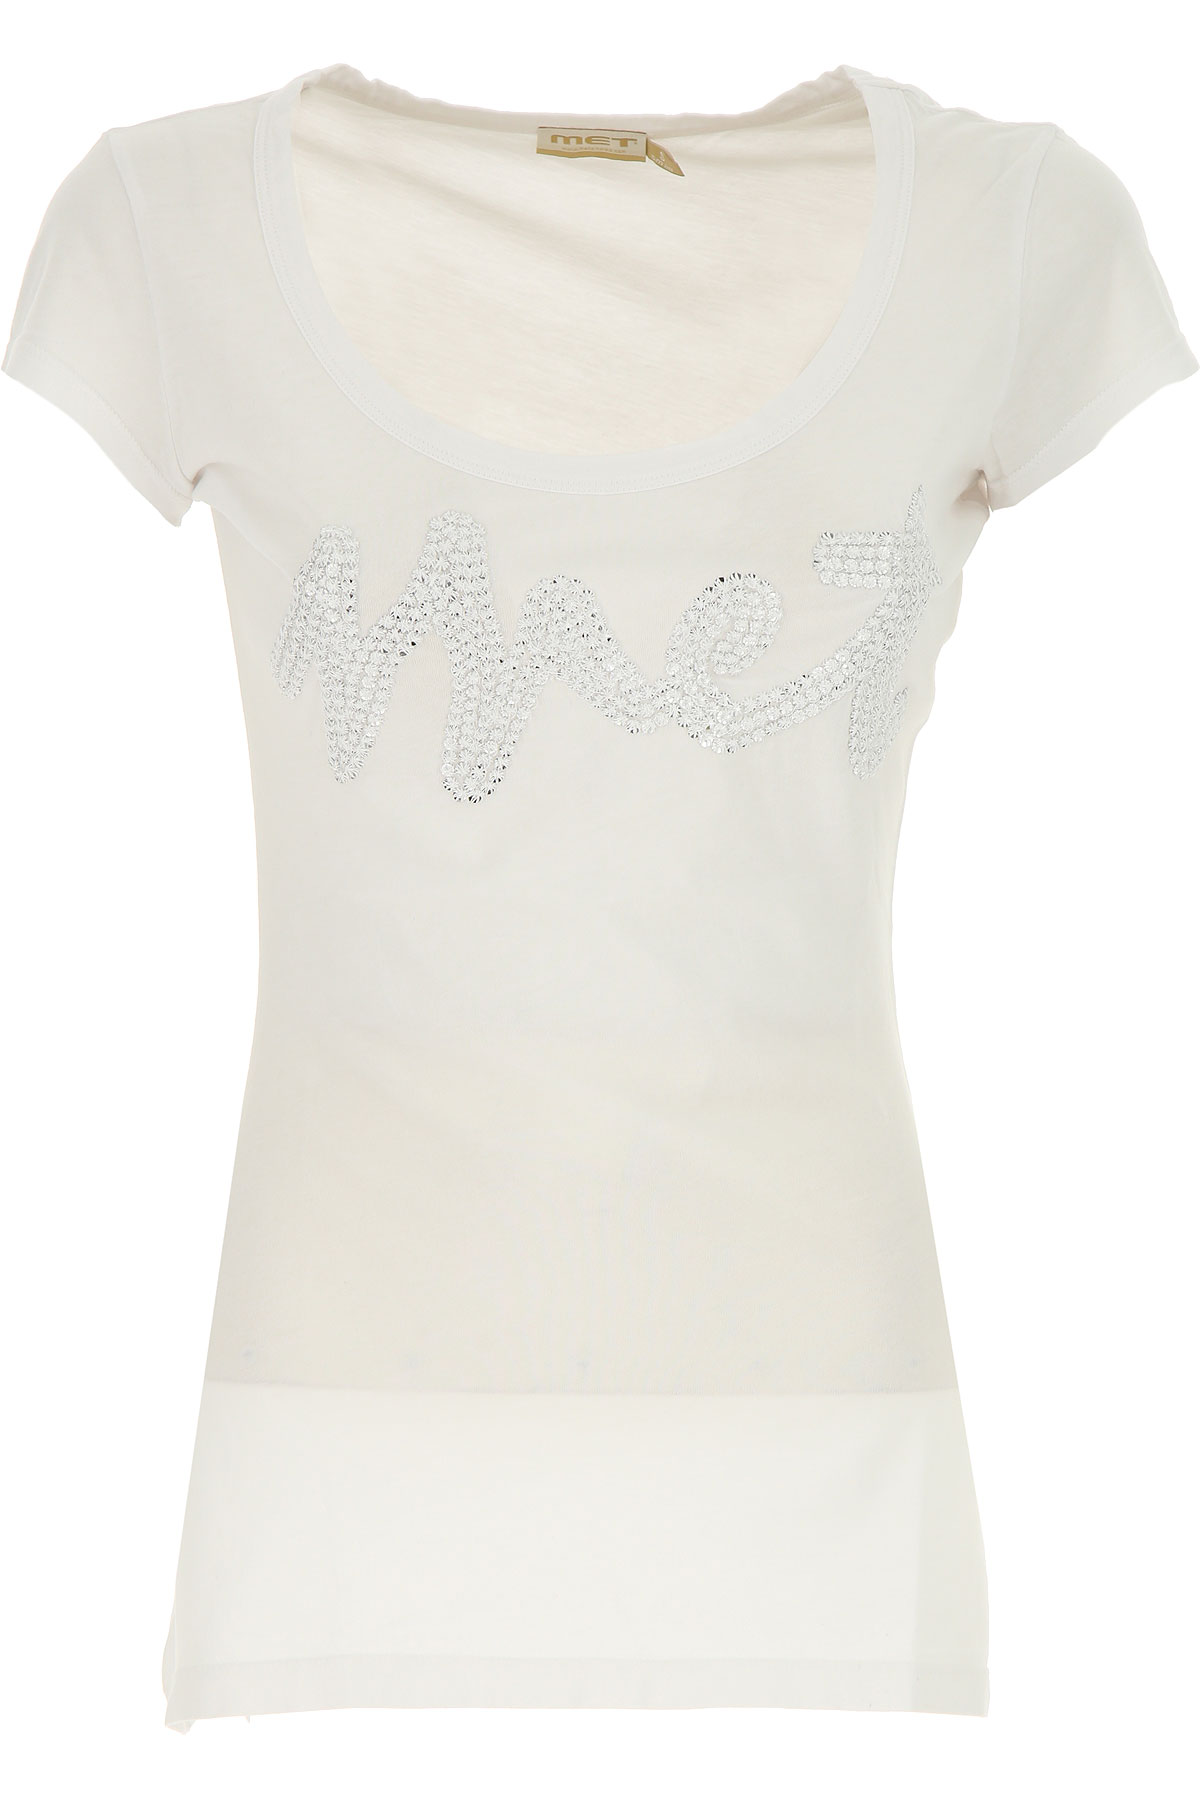 Met T-shirt Femme, Blanc, Coton, 2017, 38 40 42 44